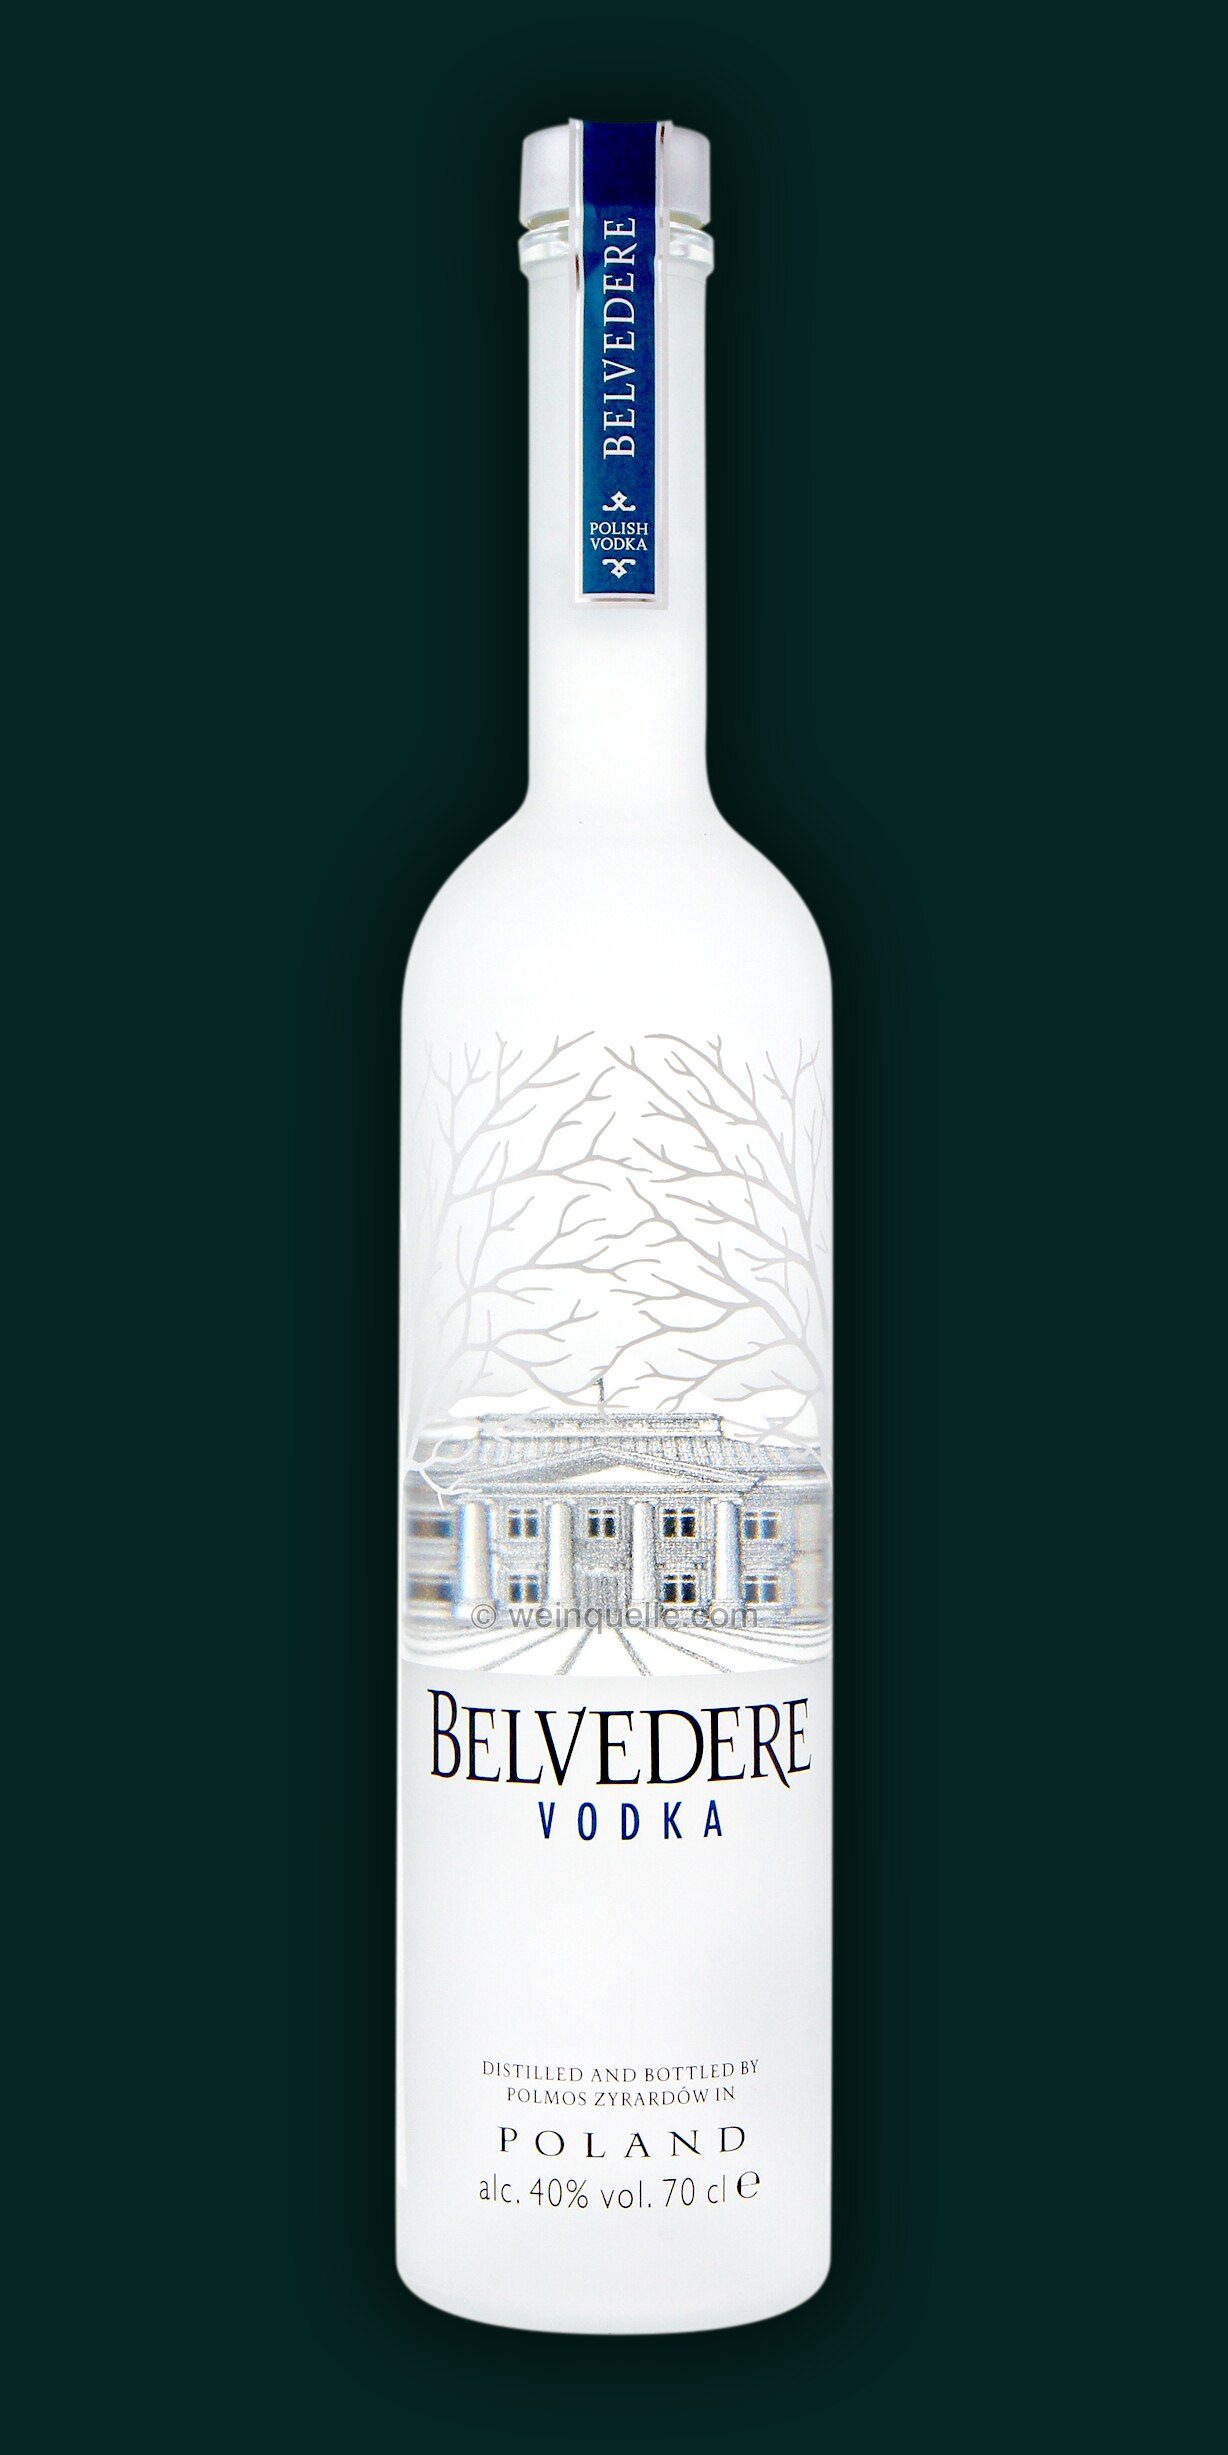 Belvedere Vodka 0,7l, alc. 40 Vol.-%, Wodka Polen